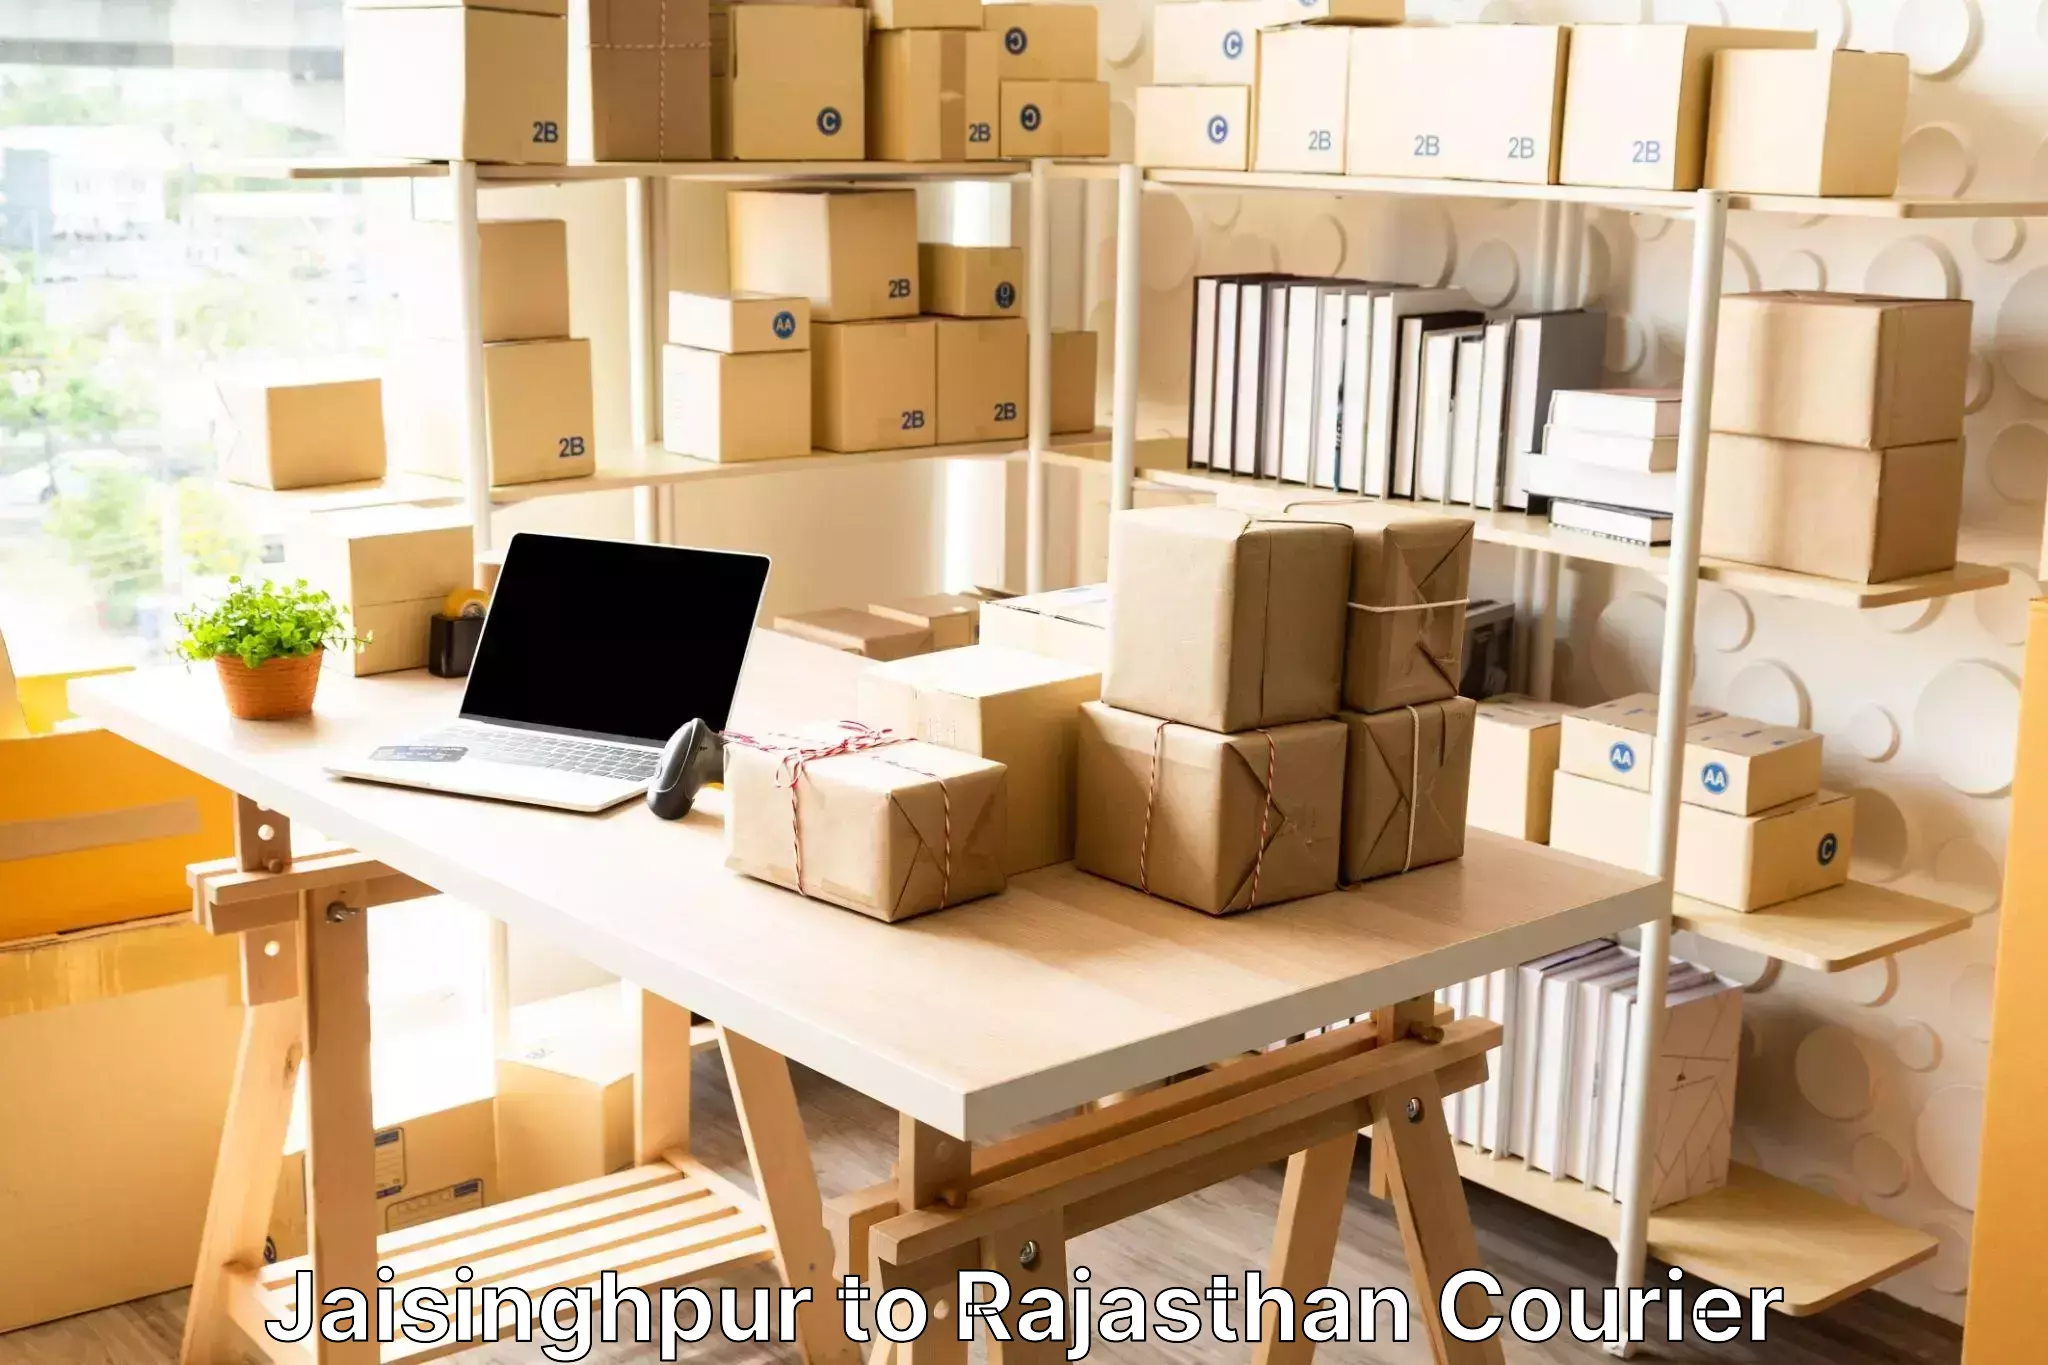 Urgent luggage shipment in Jaisinghpur to Nadoti